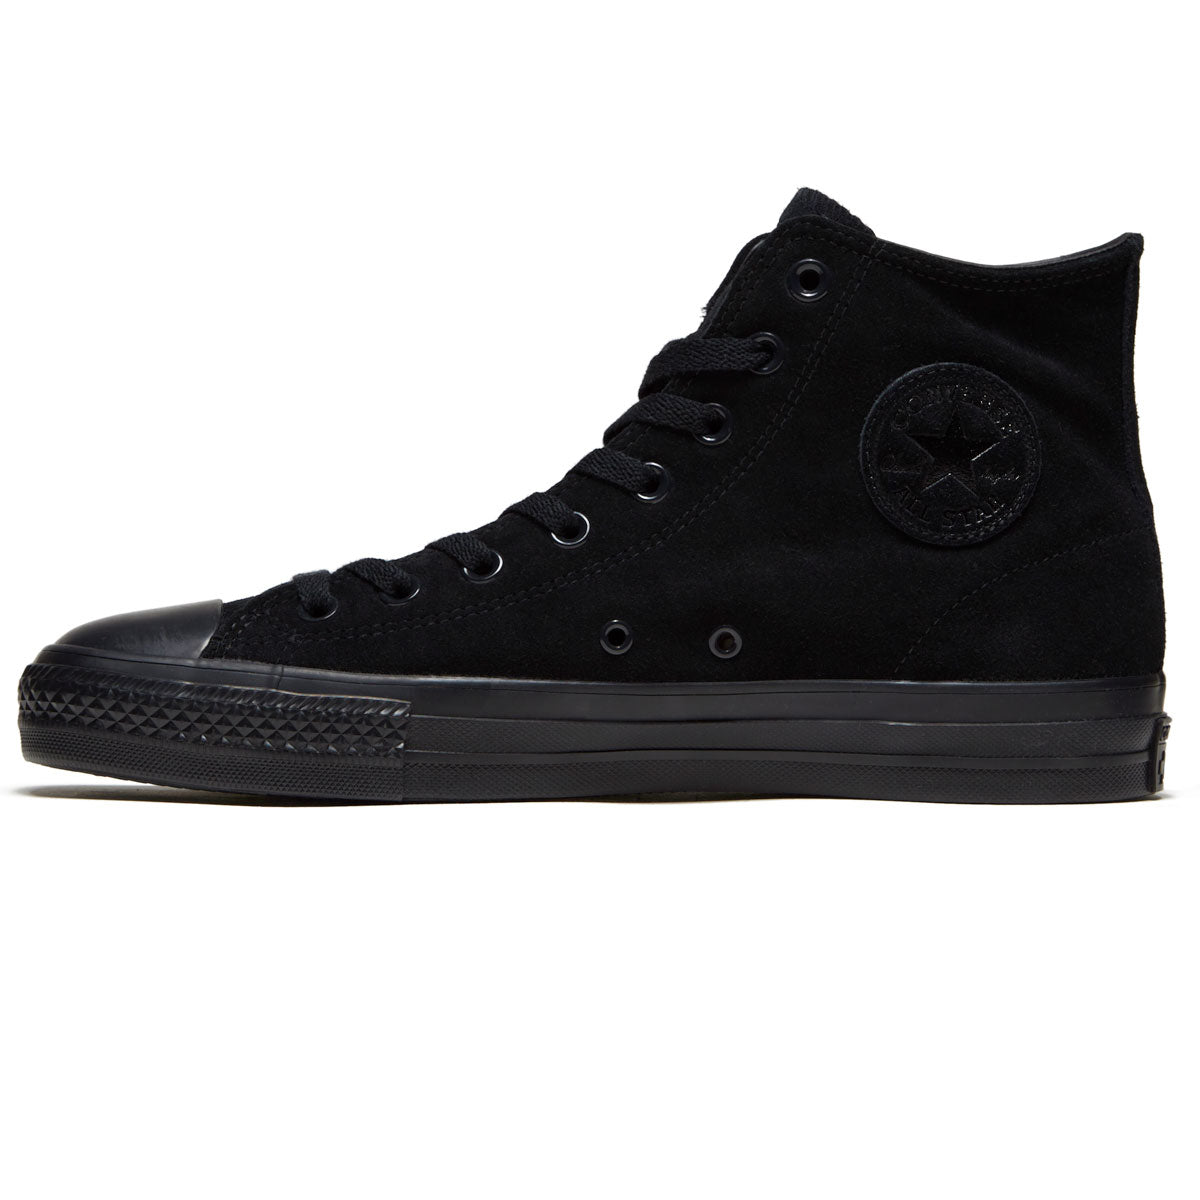 Converse Chuck Taylor All Star Pro Hi Shoes - Black/Black/Black image 2